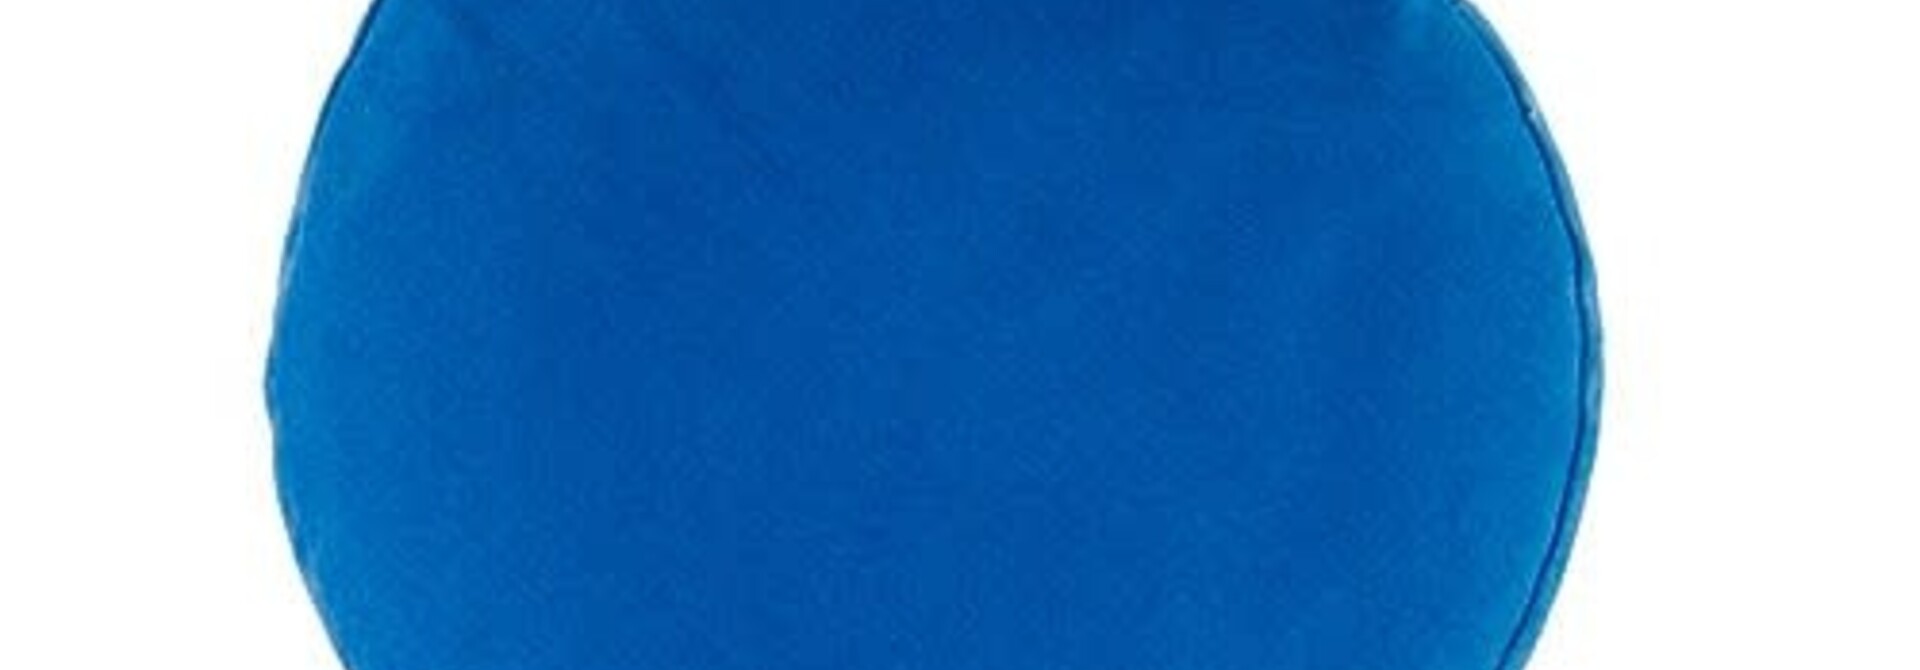 Yogisha Meditationskissen Deluxe 13cm hoch - Hellblau